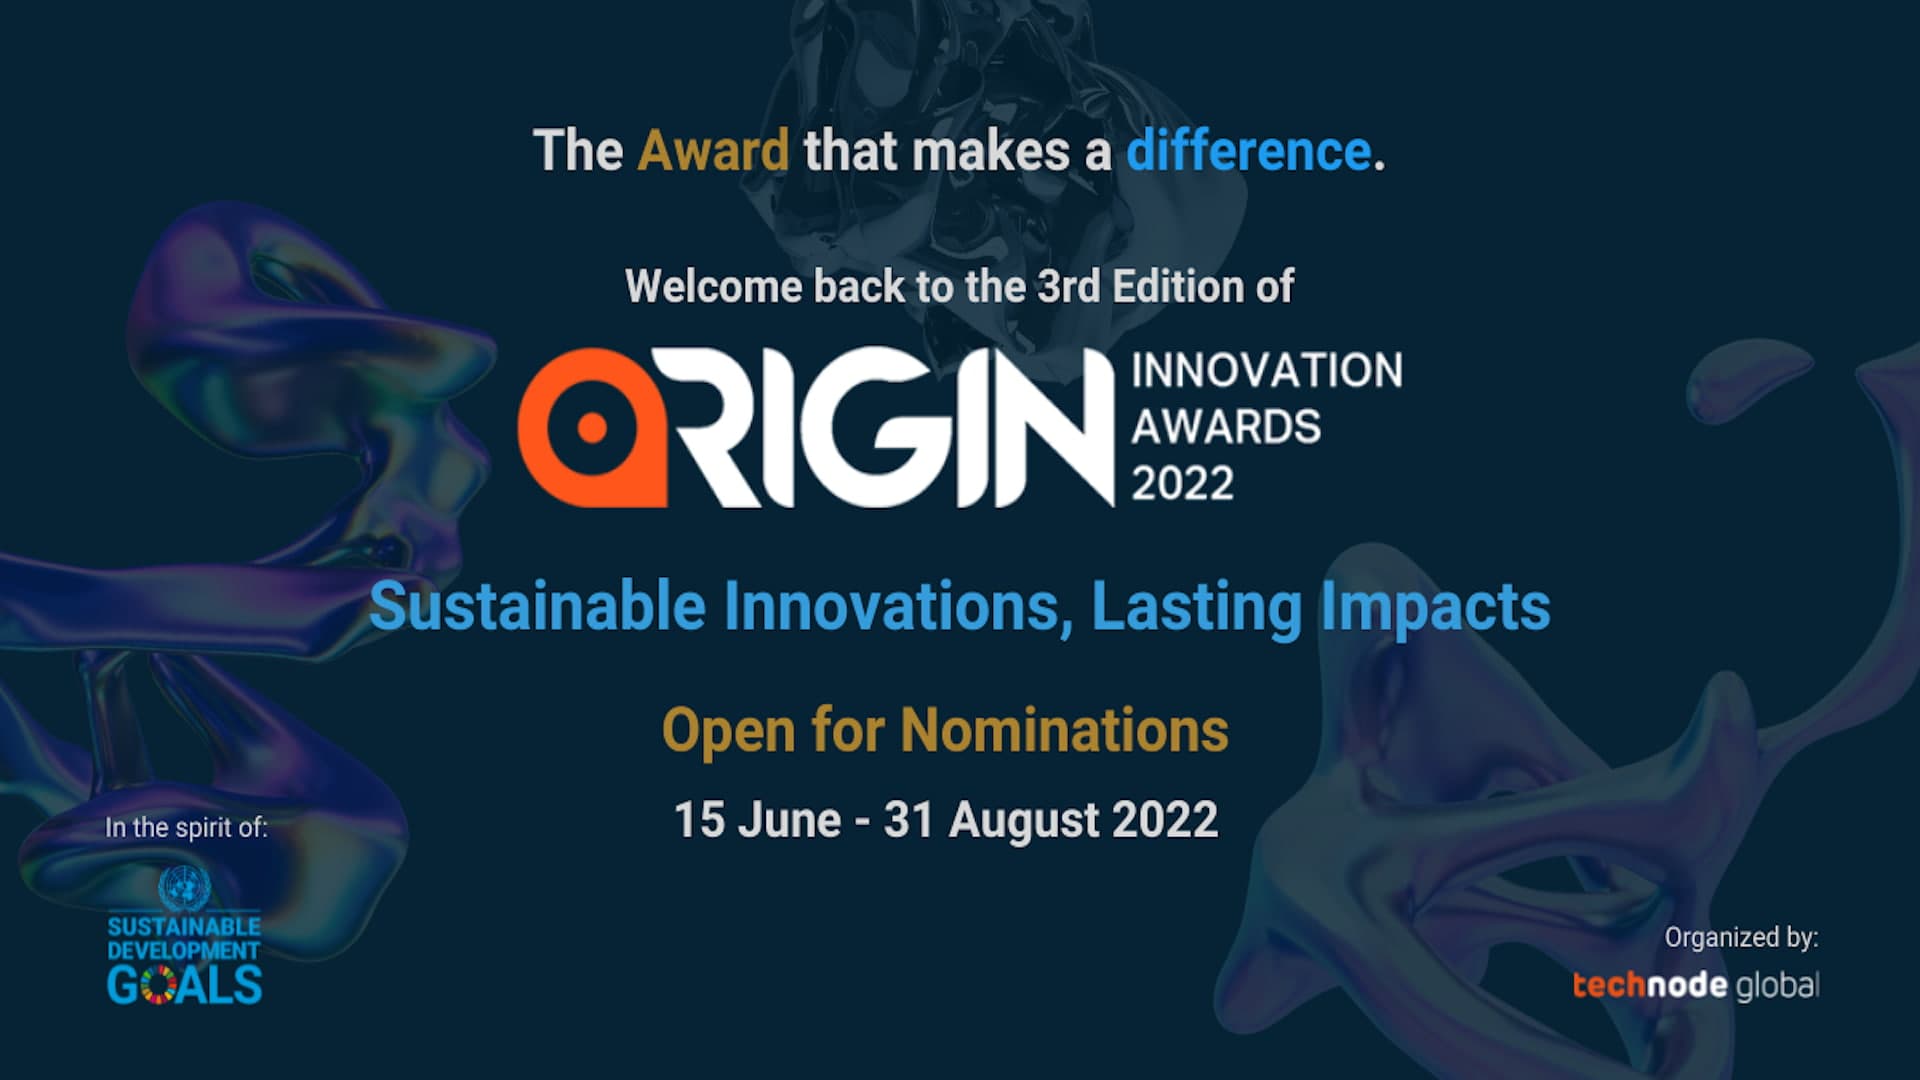 ORIGIN Innovation Awards 2022 now open for nominations